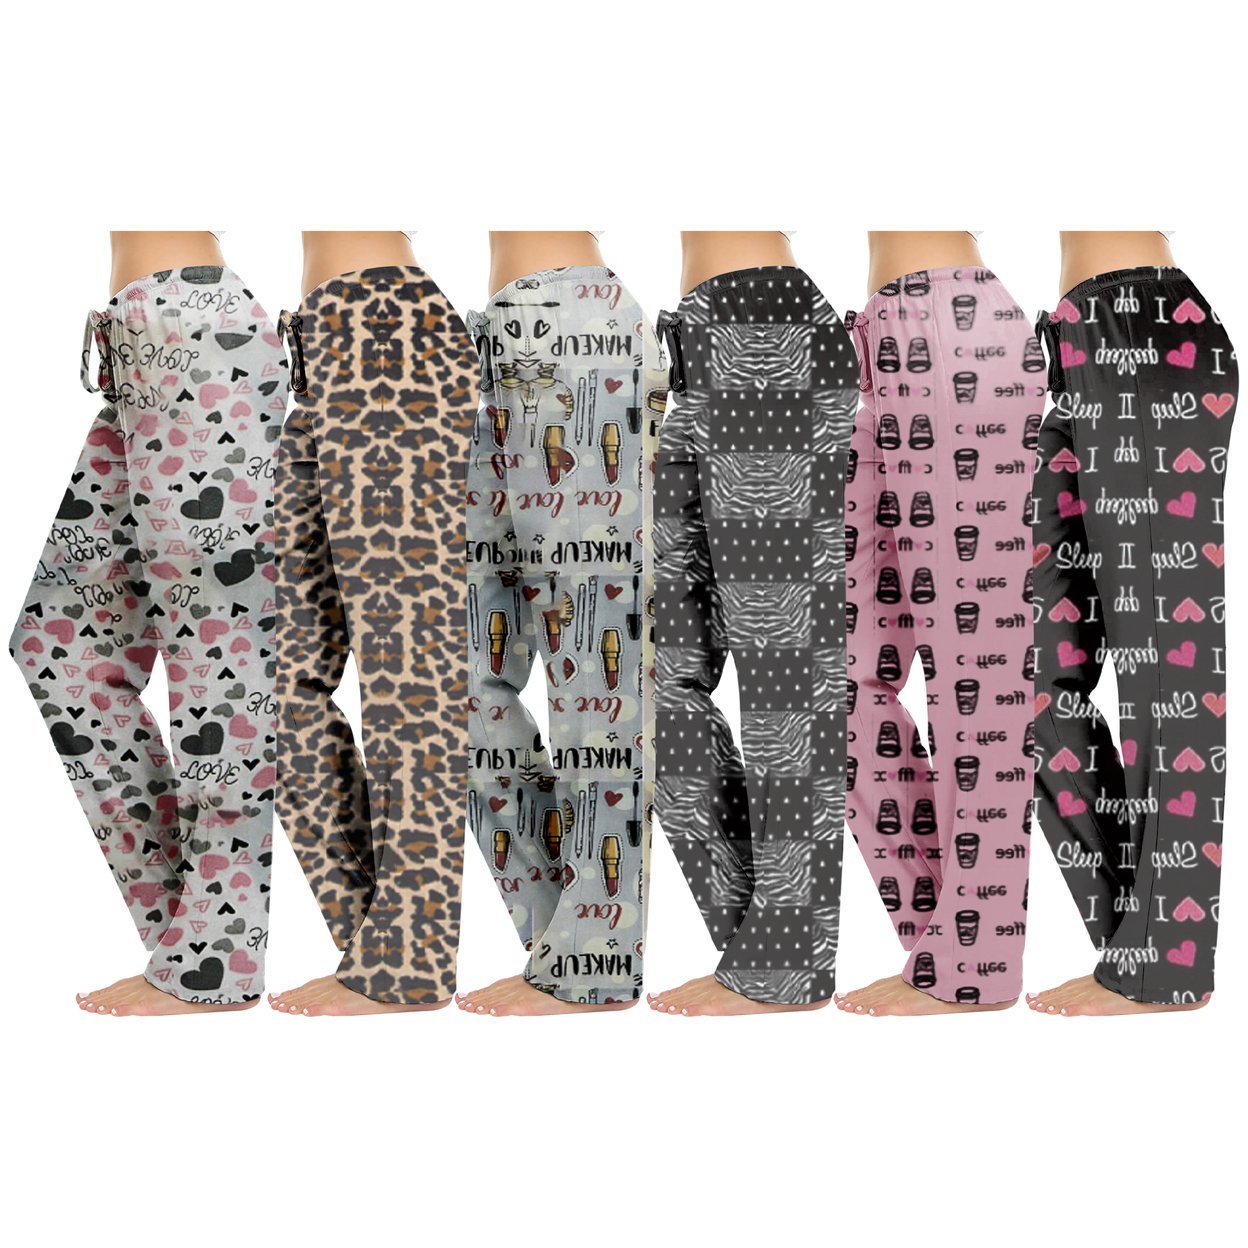 2-Pack: Women's Casual Fun Printed Lightweight Lounge Terry Knit Pajama Bottom Pants - Medium, Shapes